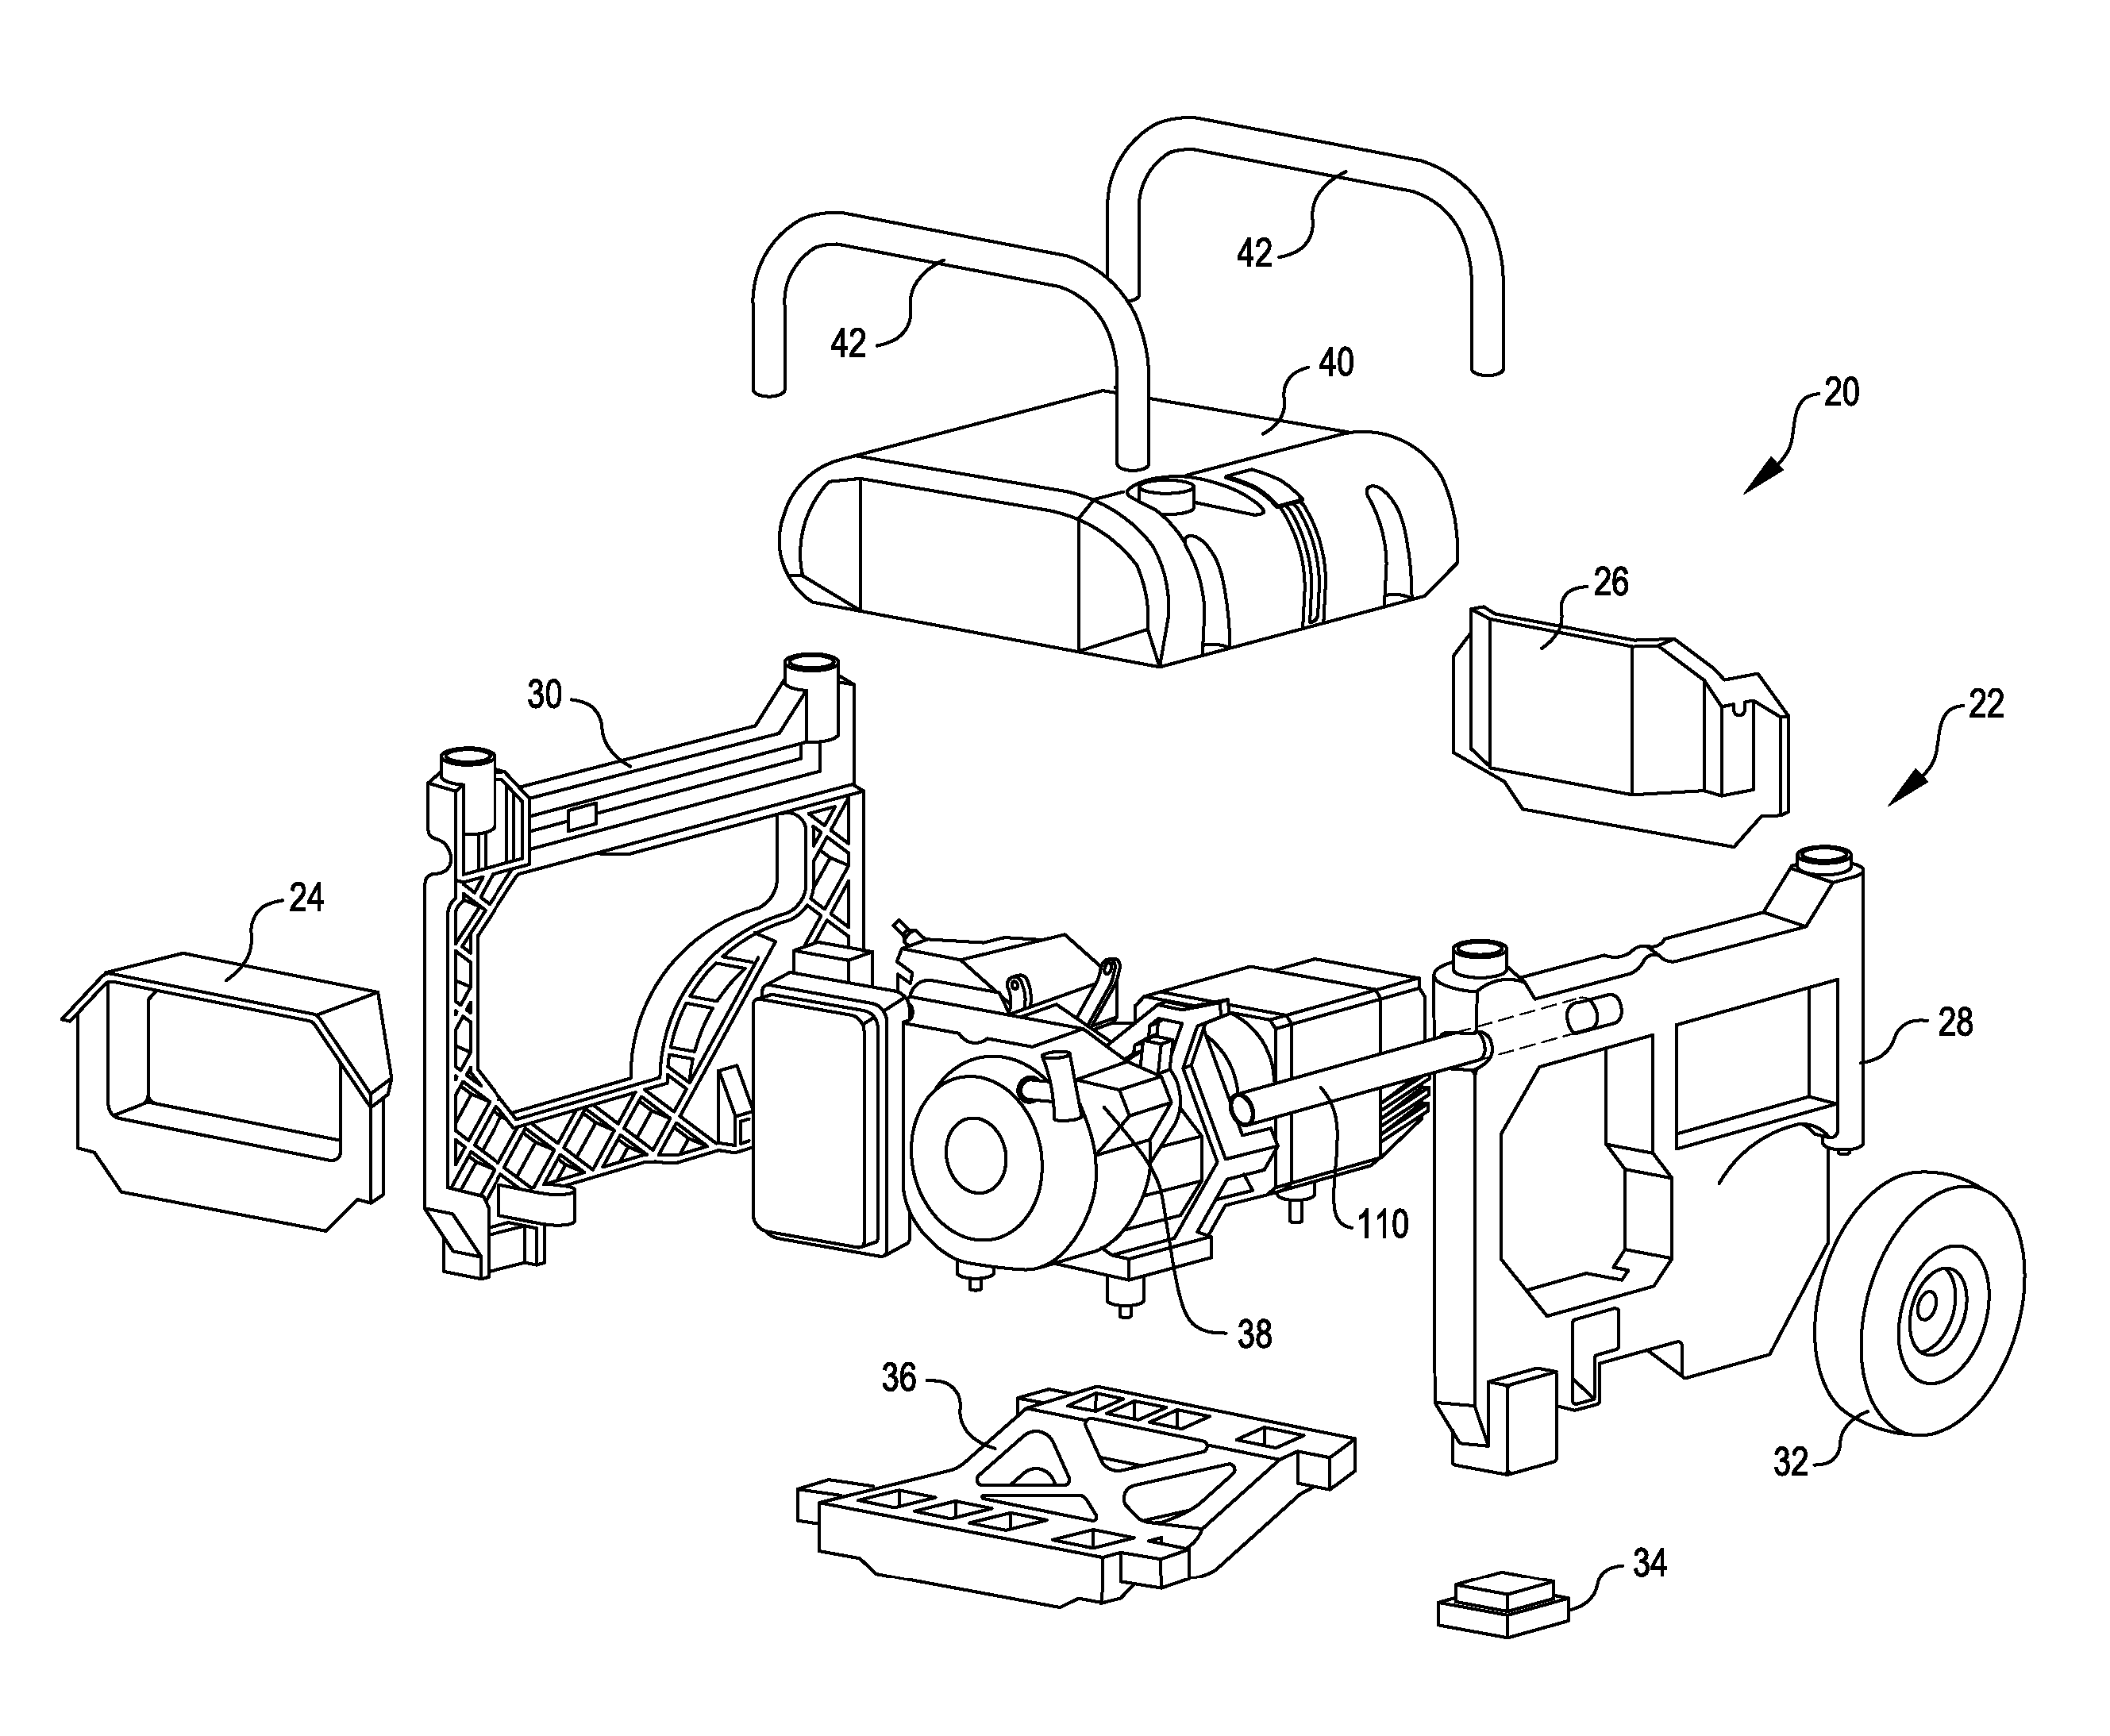 Generator having a plastic frame